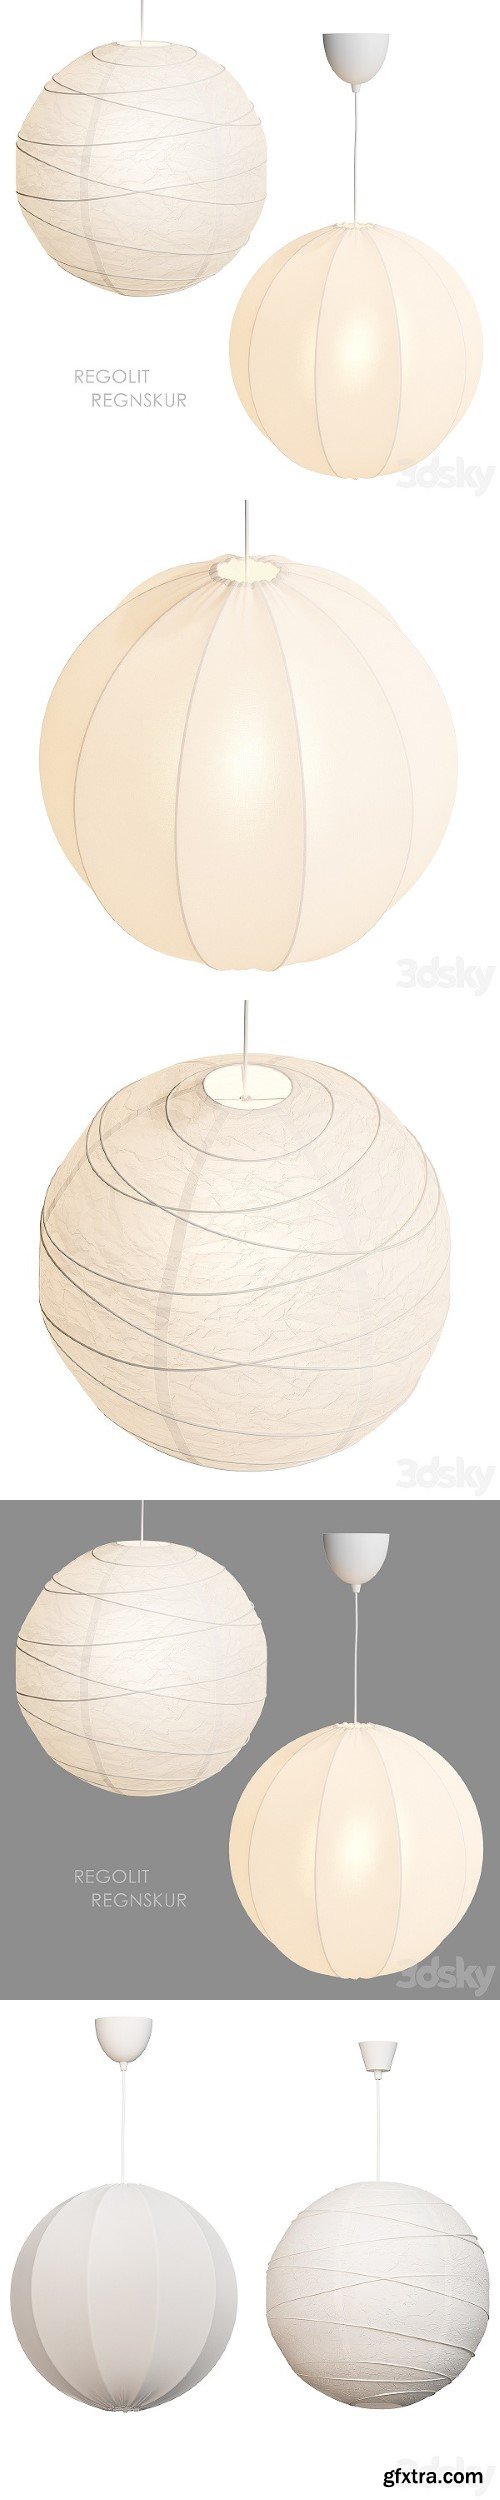 IKEA REGOLIT REGNSKUR Pendant Lamp